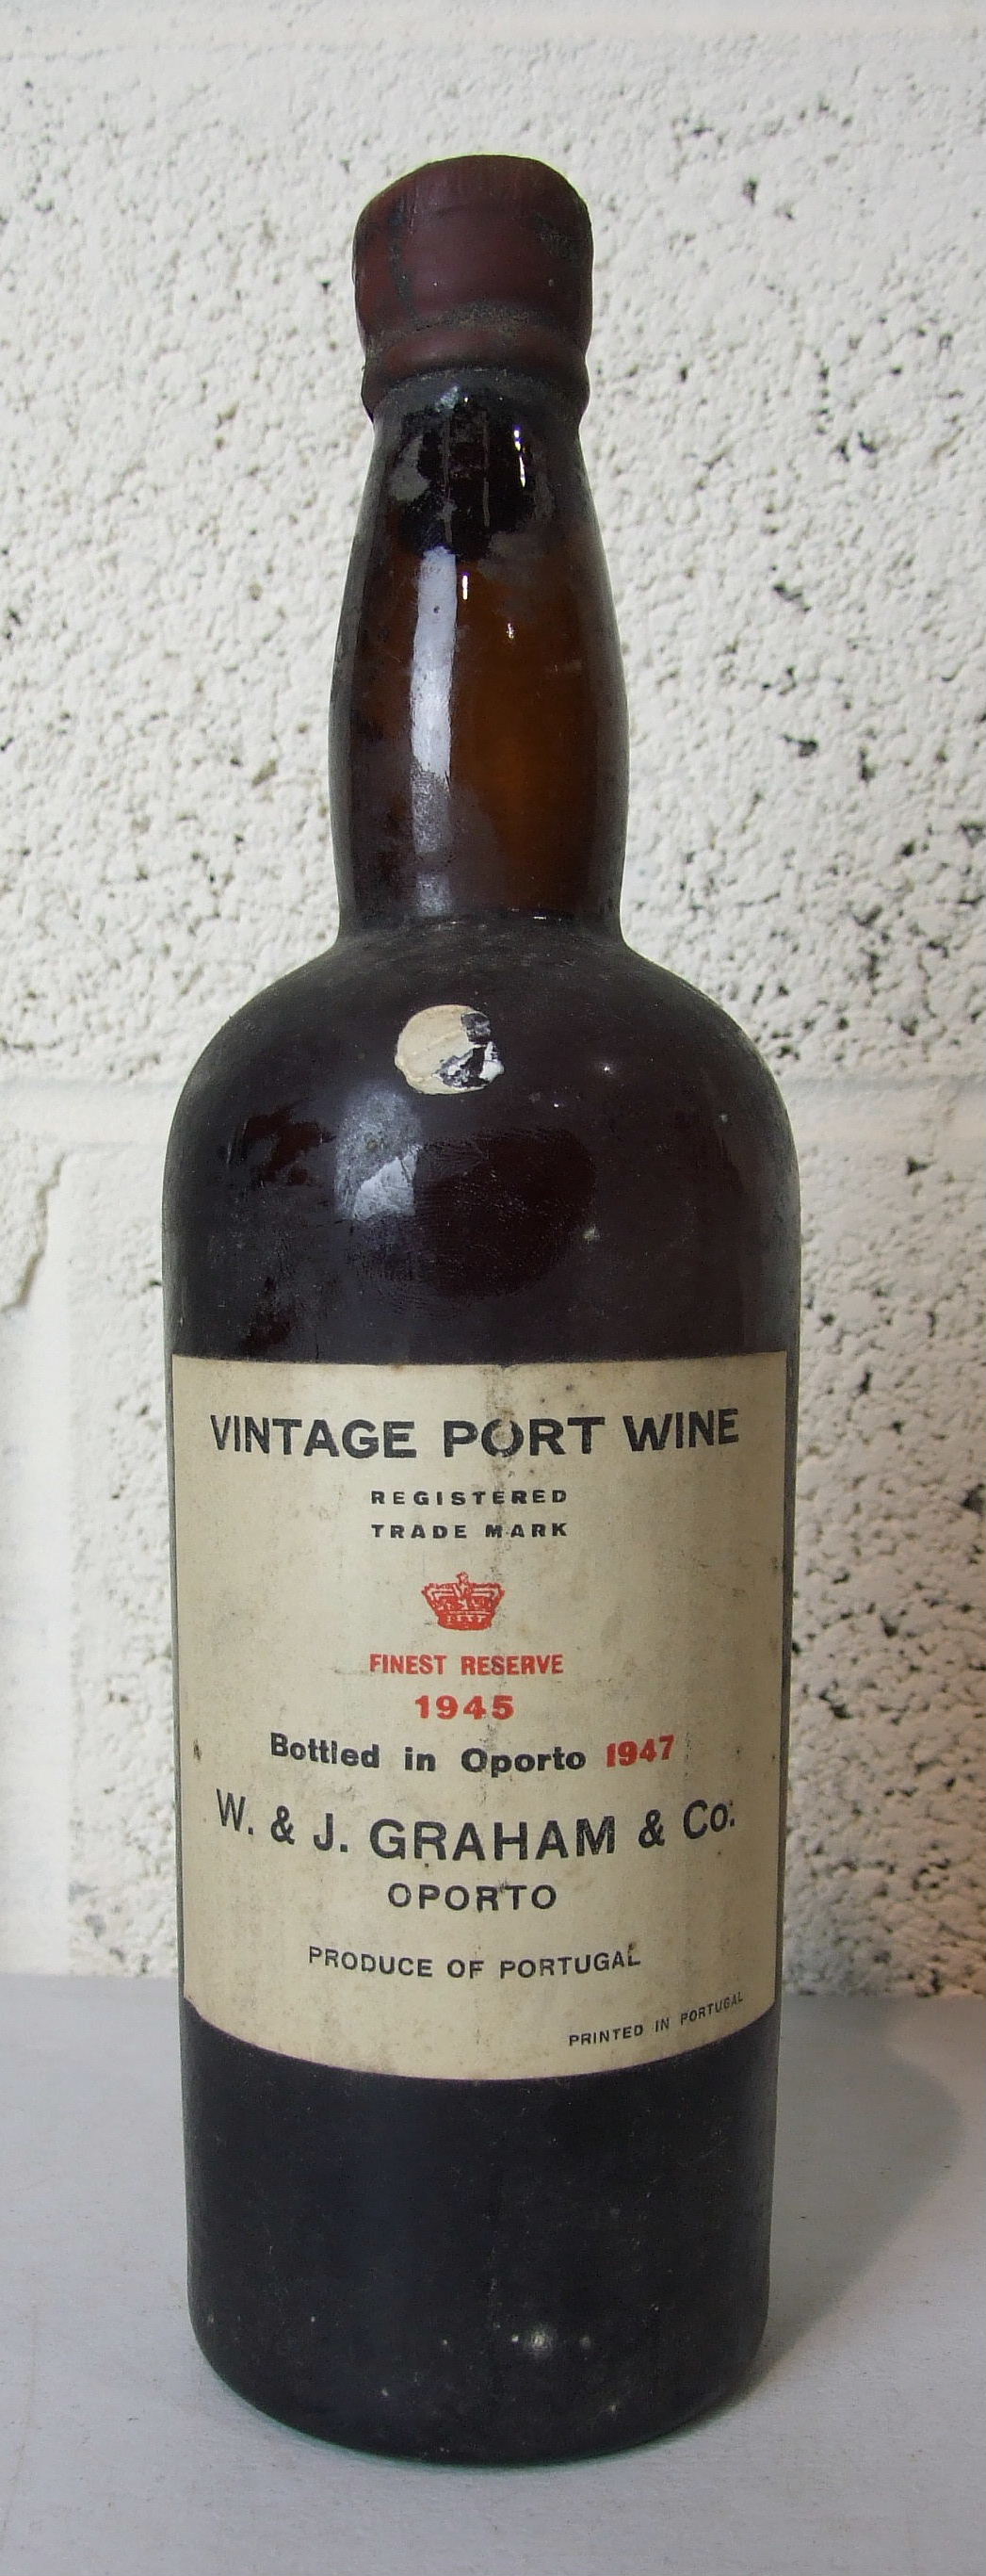 W & J Graham & Co, Oporto, Vintage Port Wine, Finest Reserve 1945, bottled in Oporto 1947, level